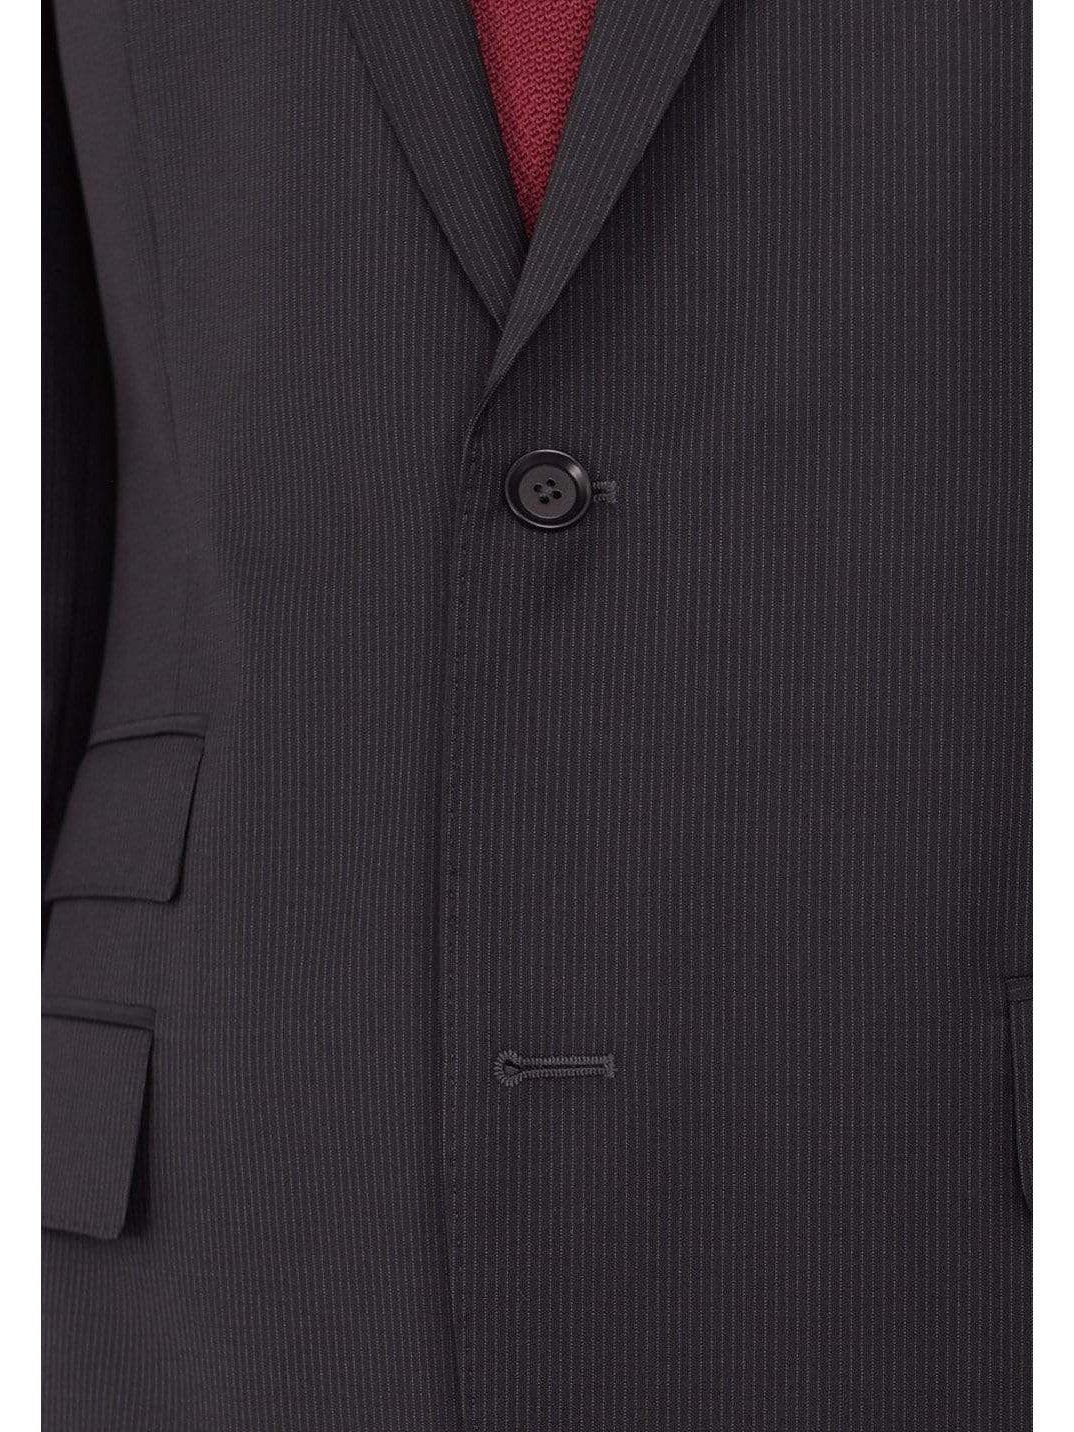 HUGO BOSS Black Wool Suit | The Suit Depot